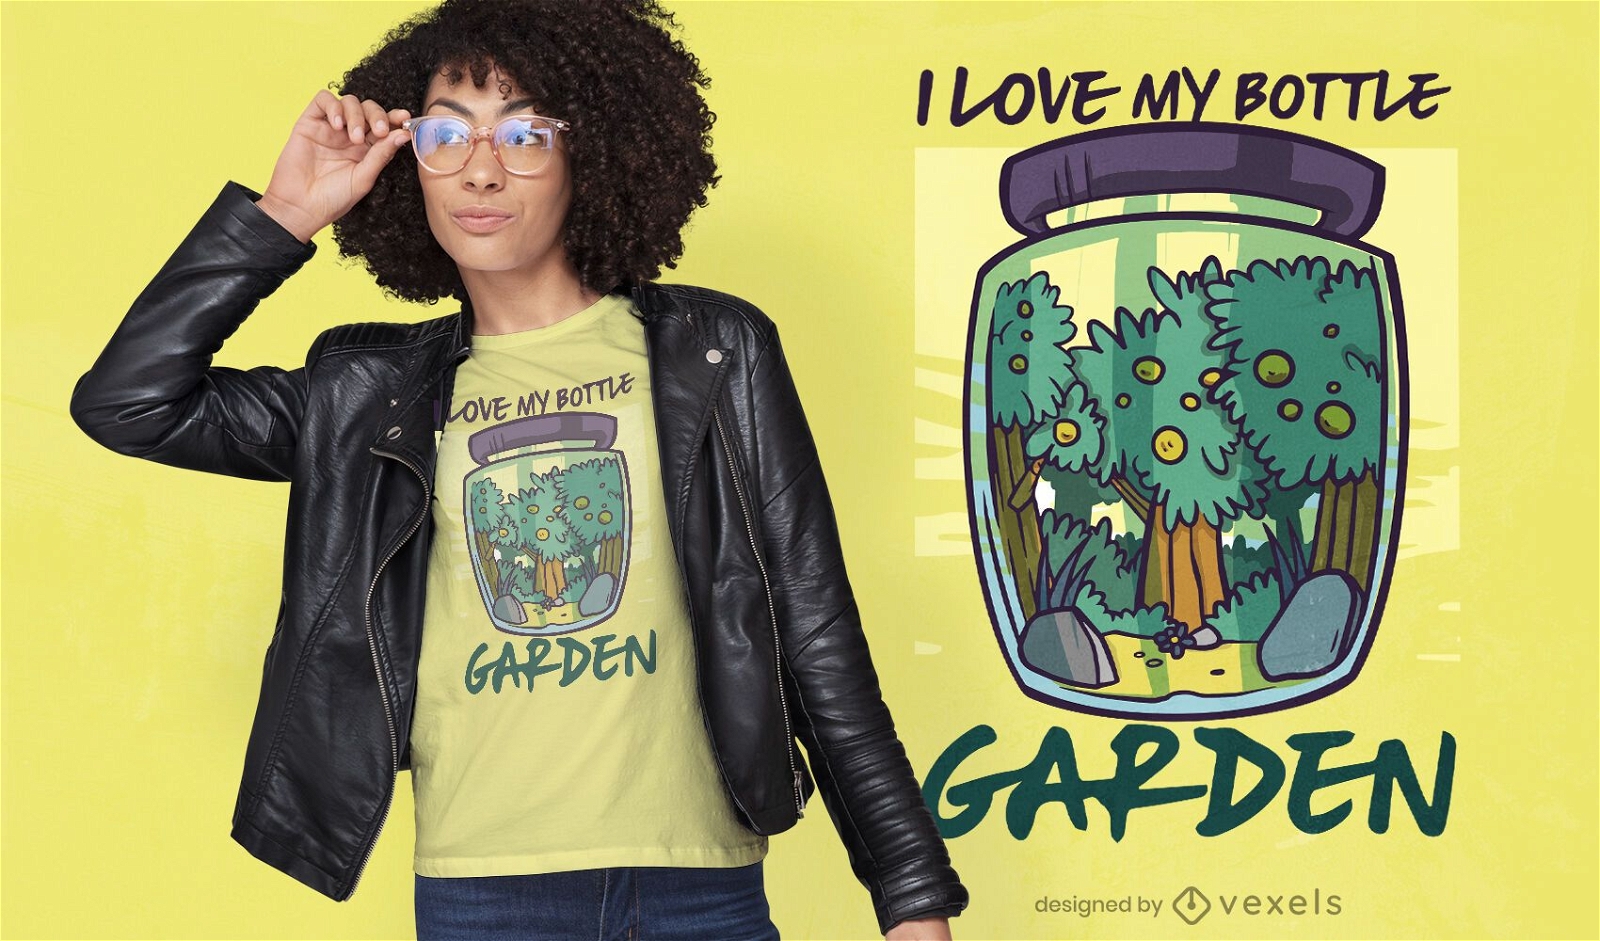 Bottle garden t-shirt design